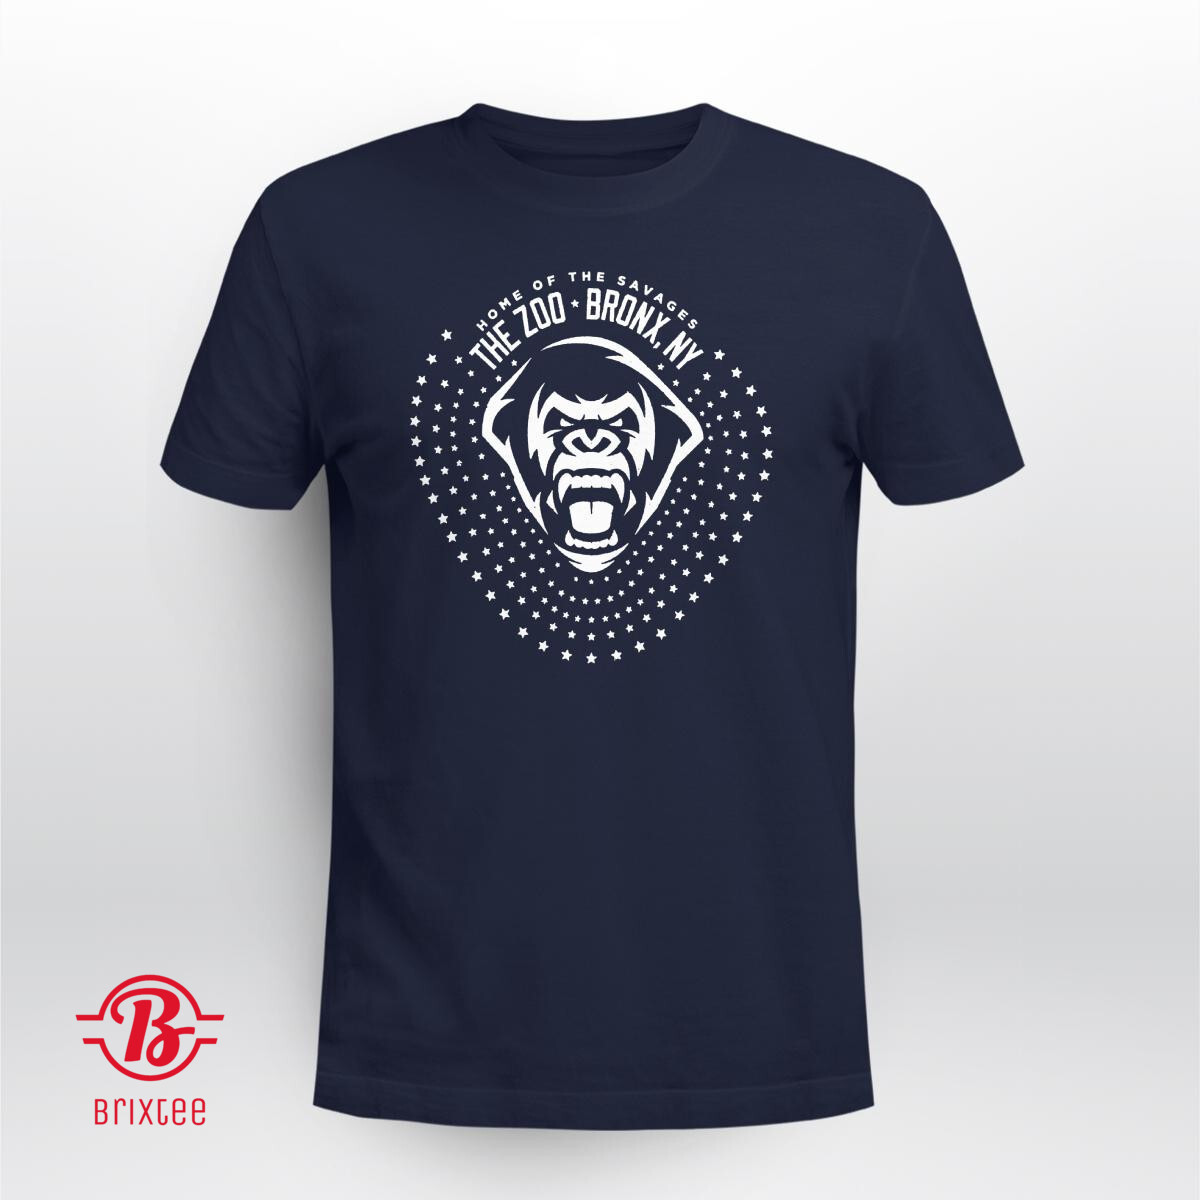 The Zoo T-Shirt Bronx, NY - New York Yankees